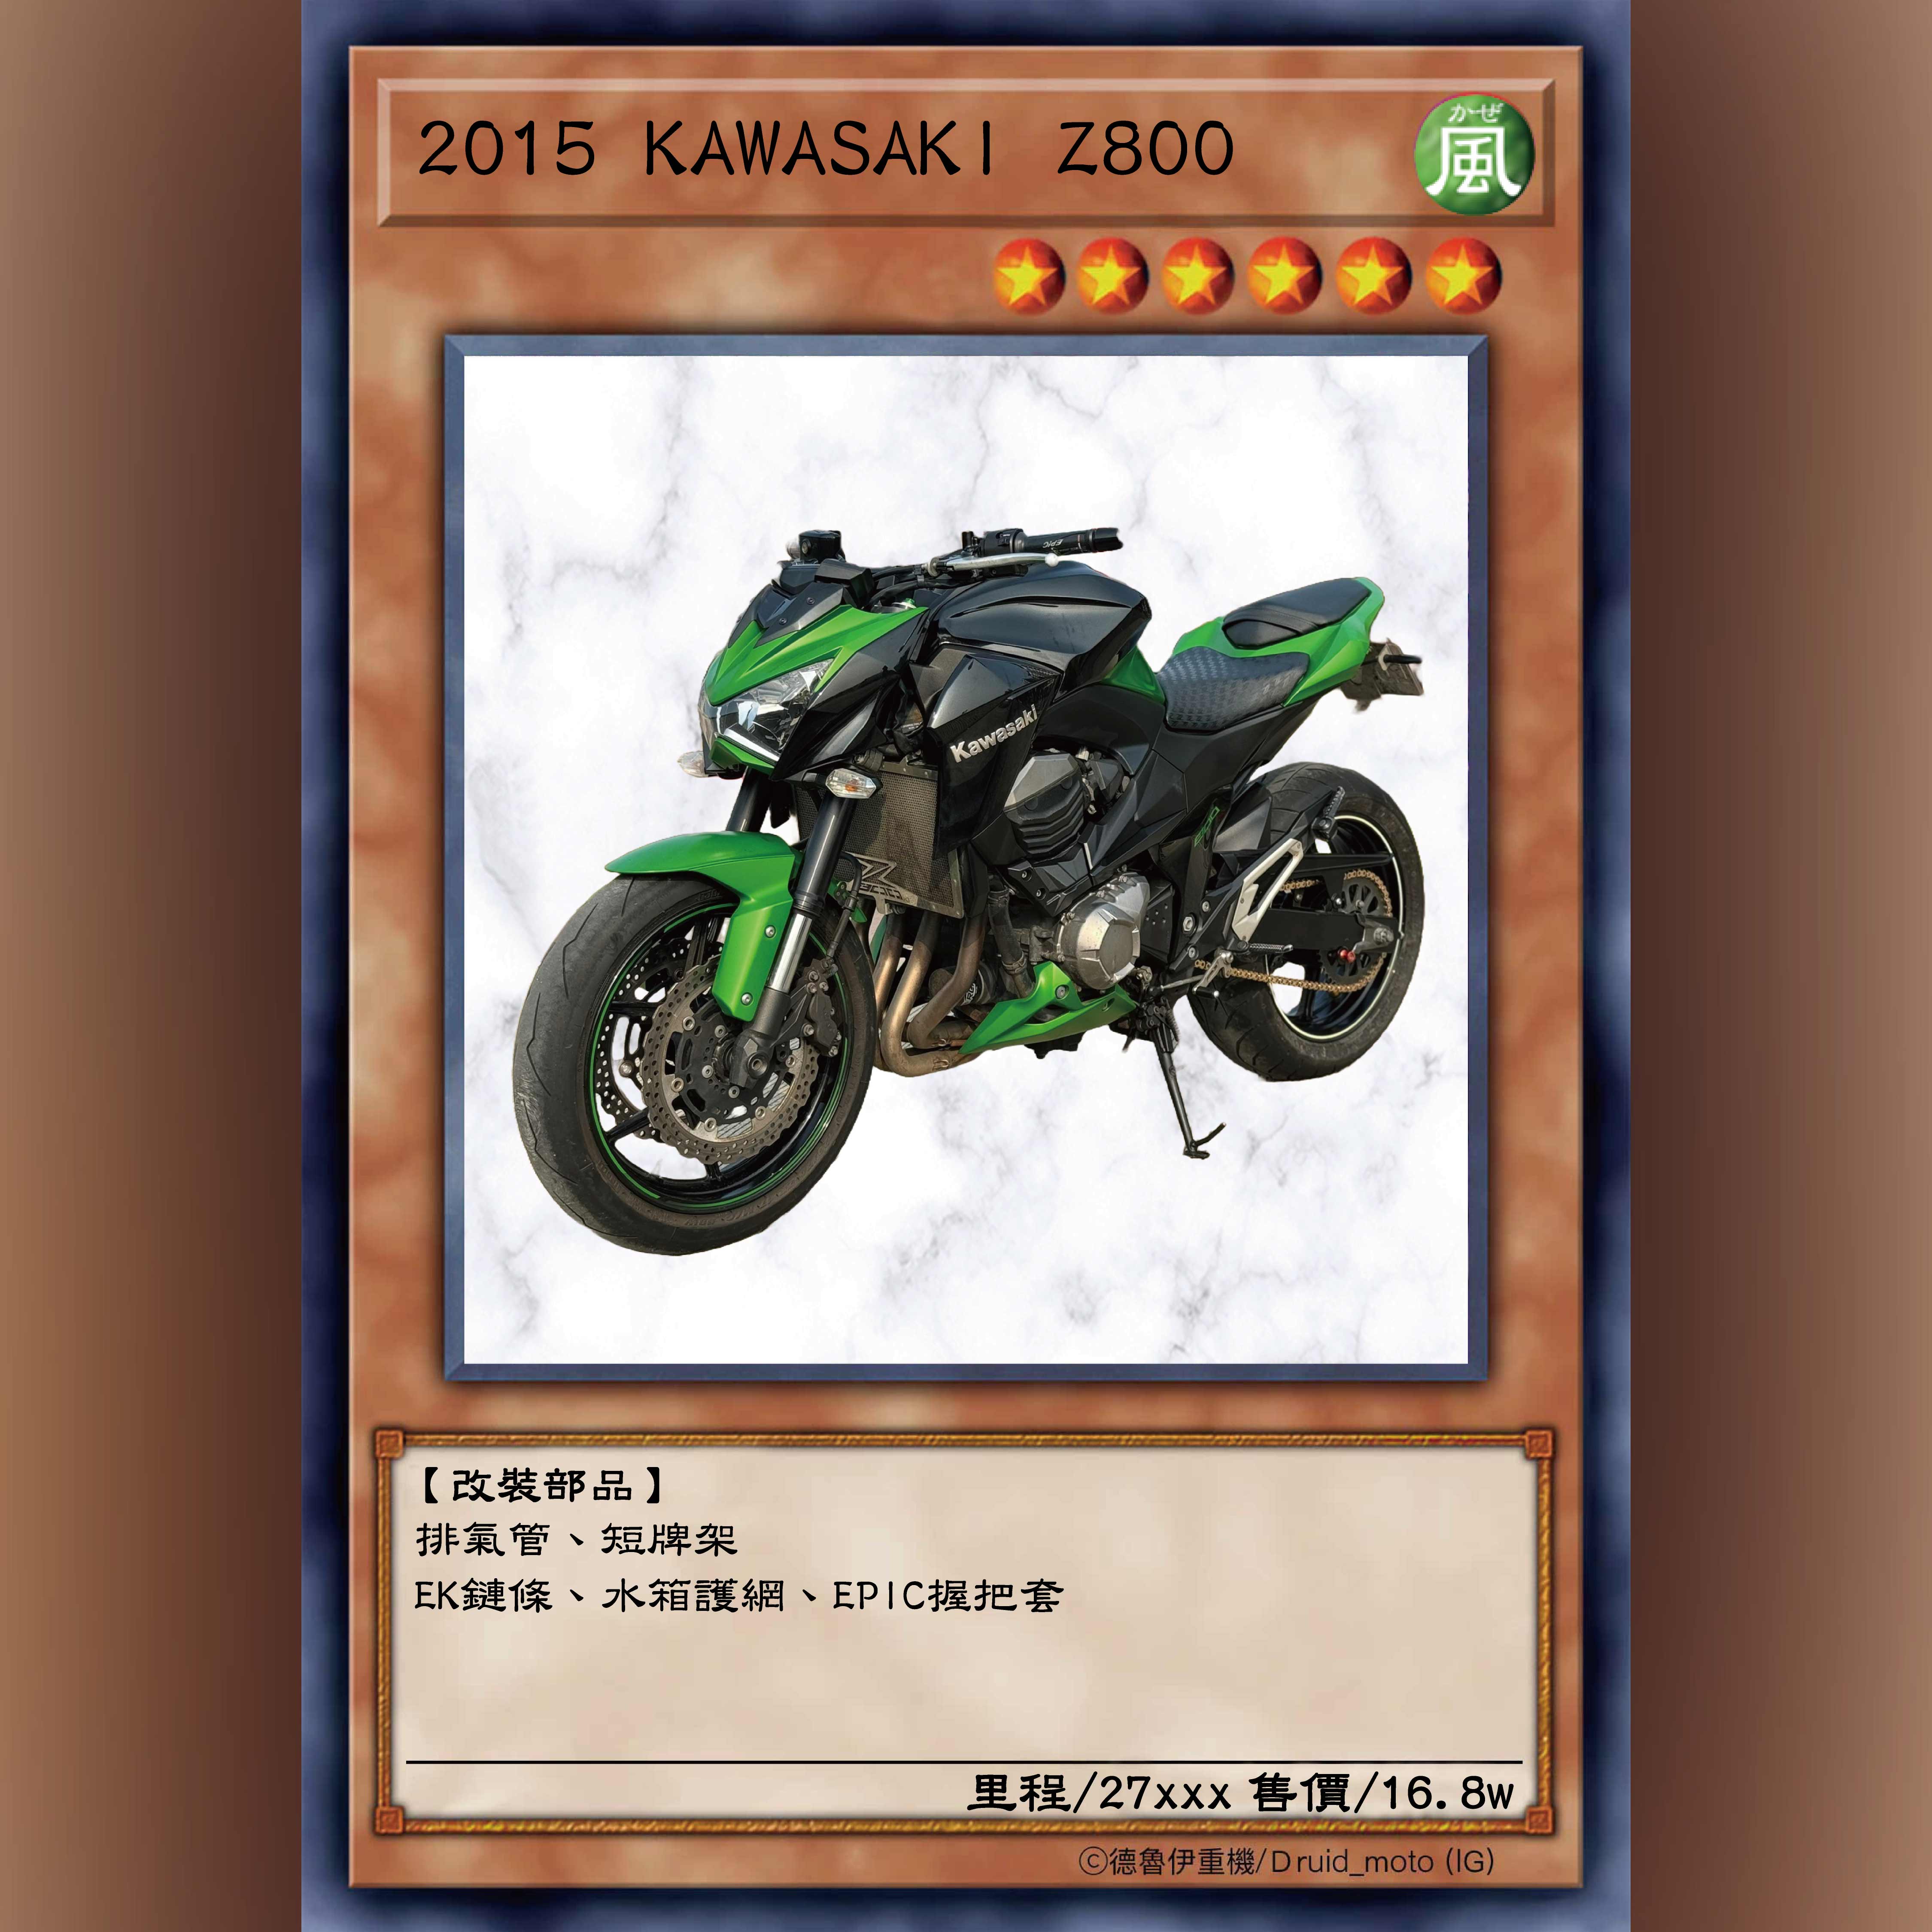 【德魯伊重機】KAWASAKI Z800 - 「Webike-摩托車市」 KAWASAKI Z800 